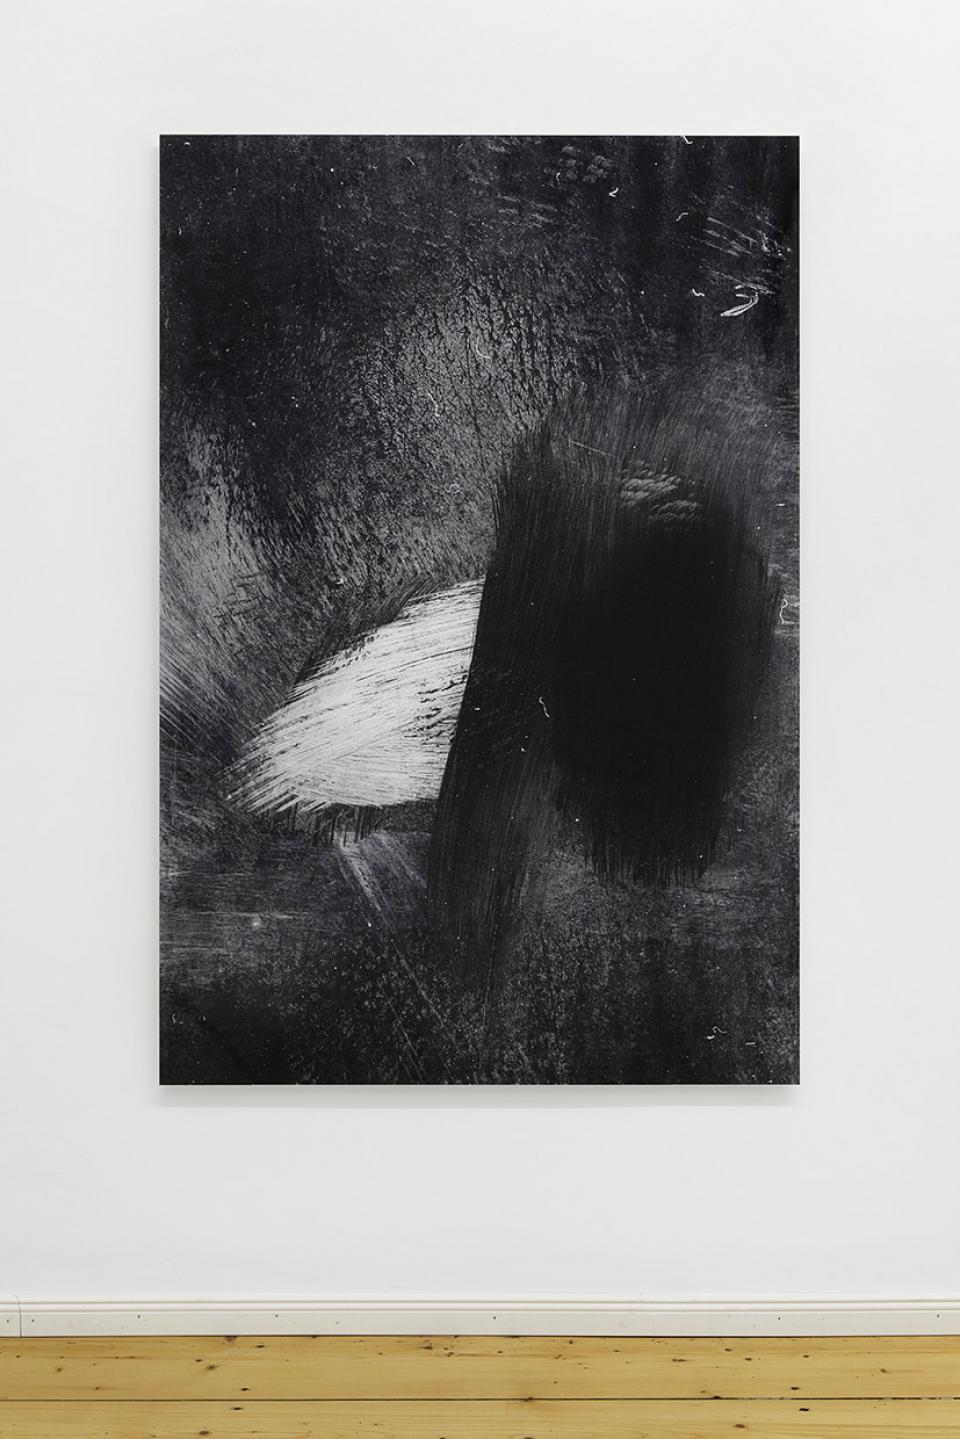 displayed_003, 2015,c-print / diasec,150 x 100 cm